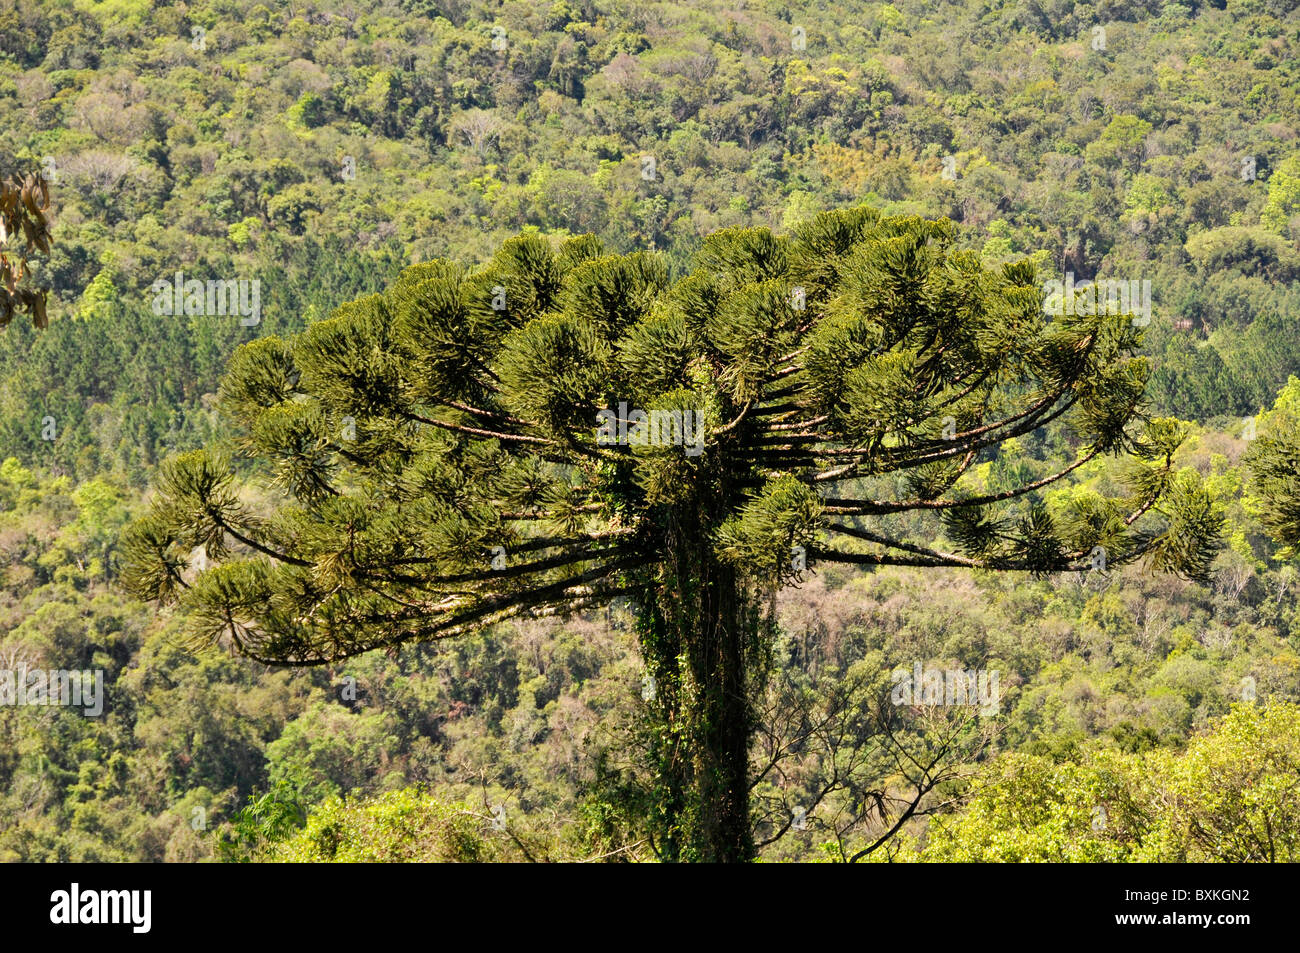 Parana pine or candelabra tree, Araucaria angustifolia, Nova Petropolis, Rio Grande do Sul, Brazil Stock Photo